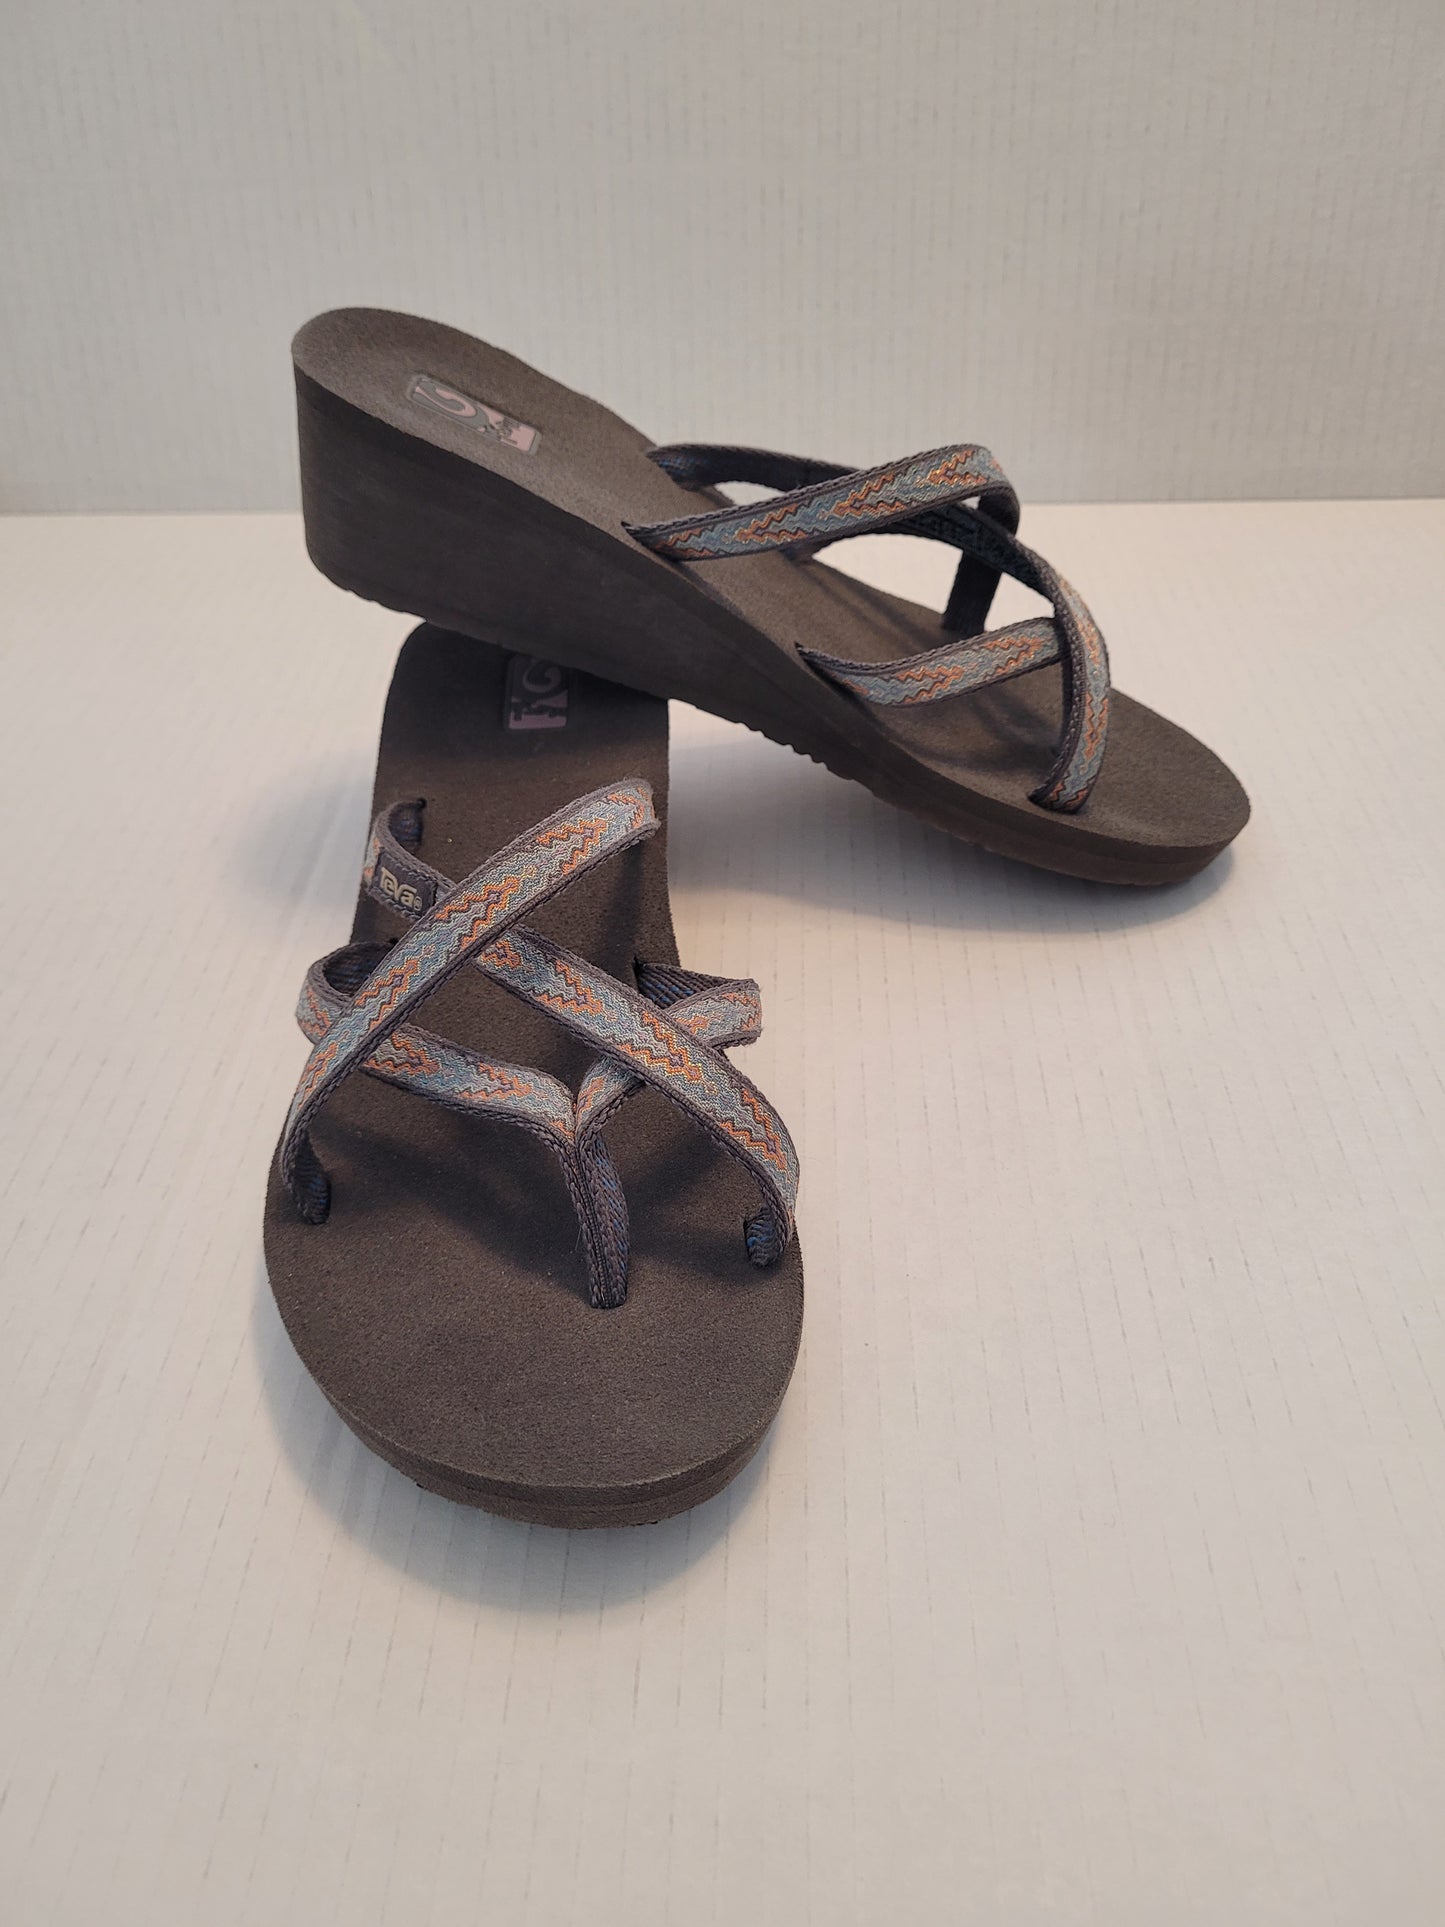 Teva Women's Platform Sandals Size 8